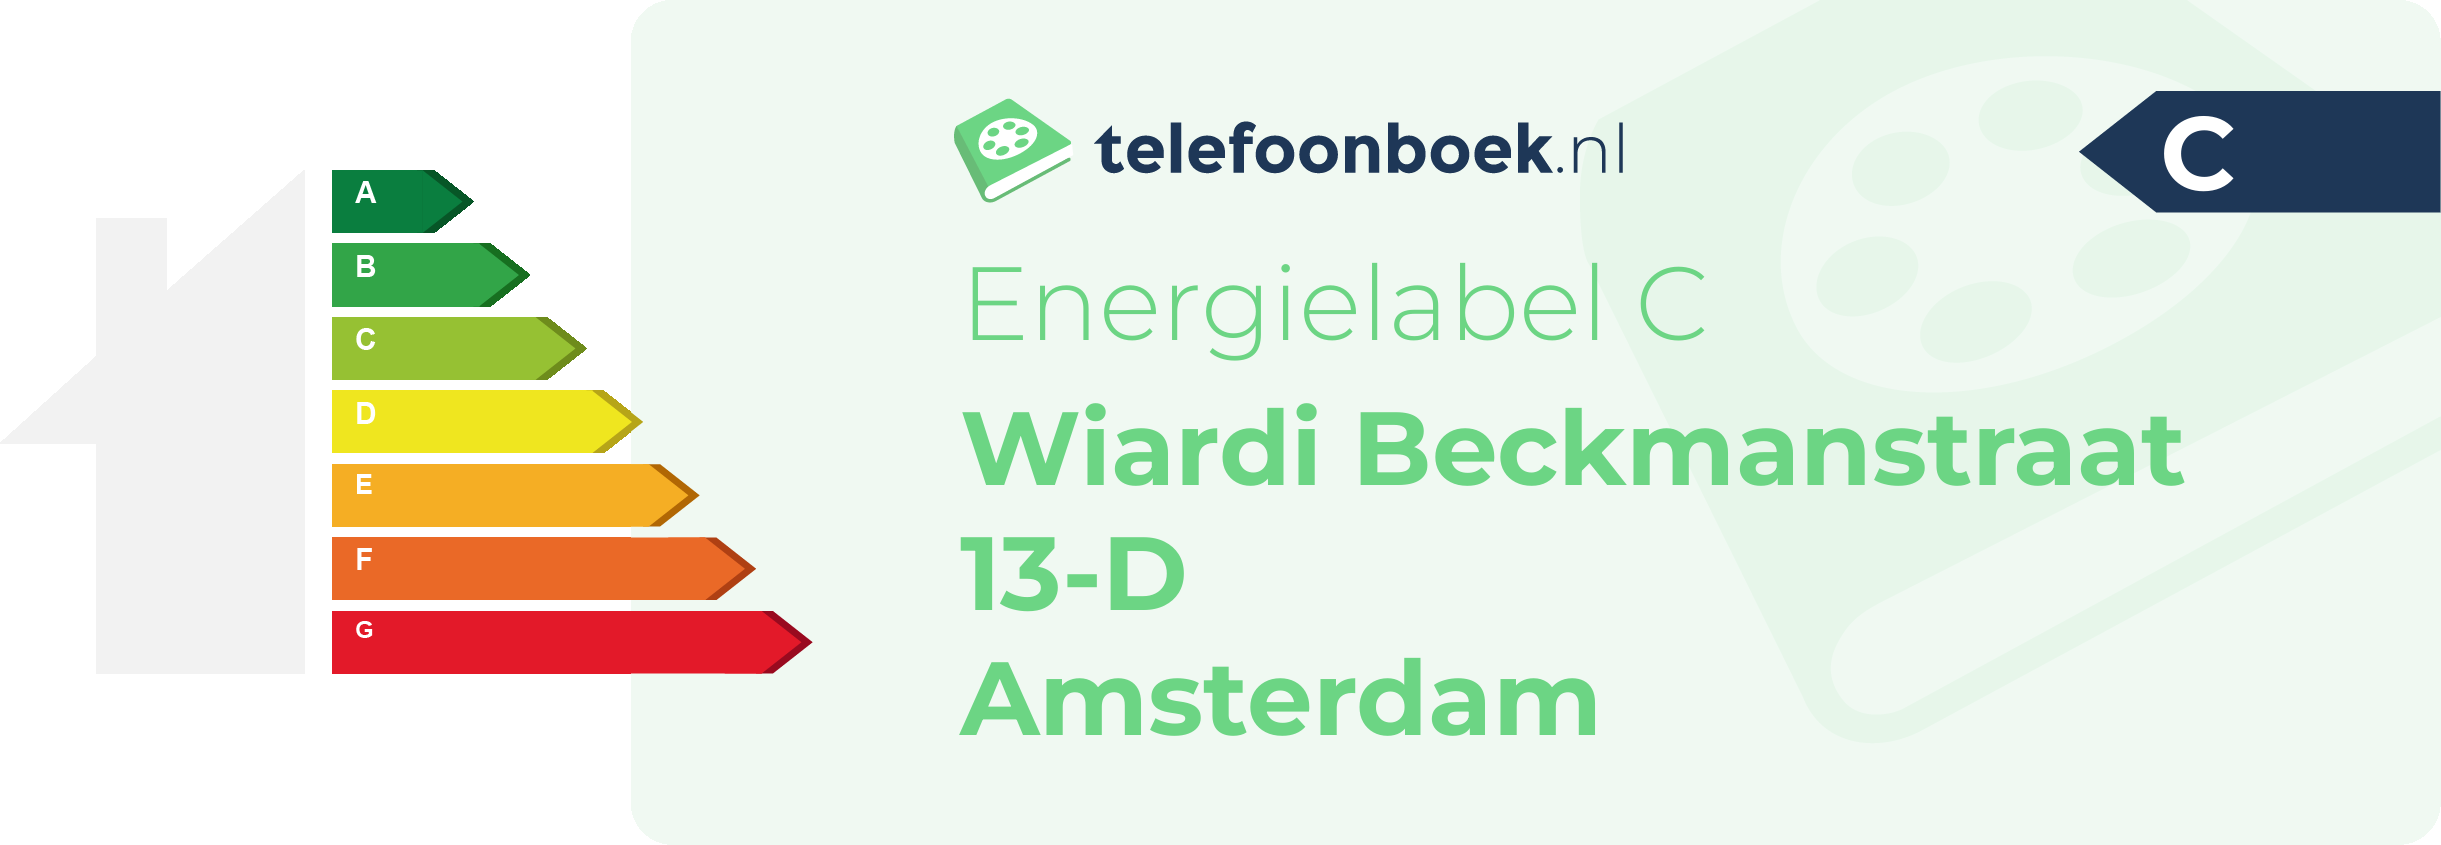 Energielabel Wiardi Beckmanstraat 13-D Amsterdam